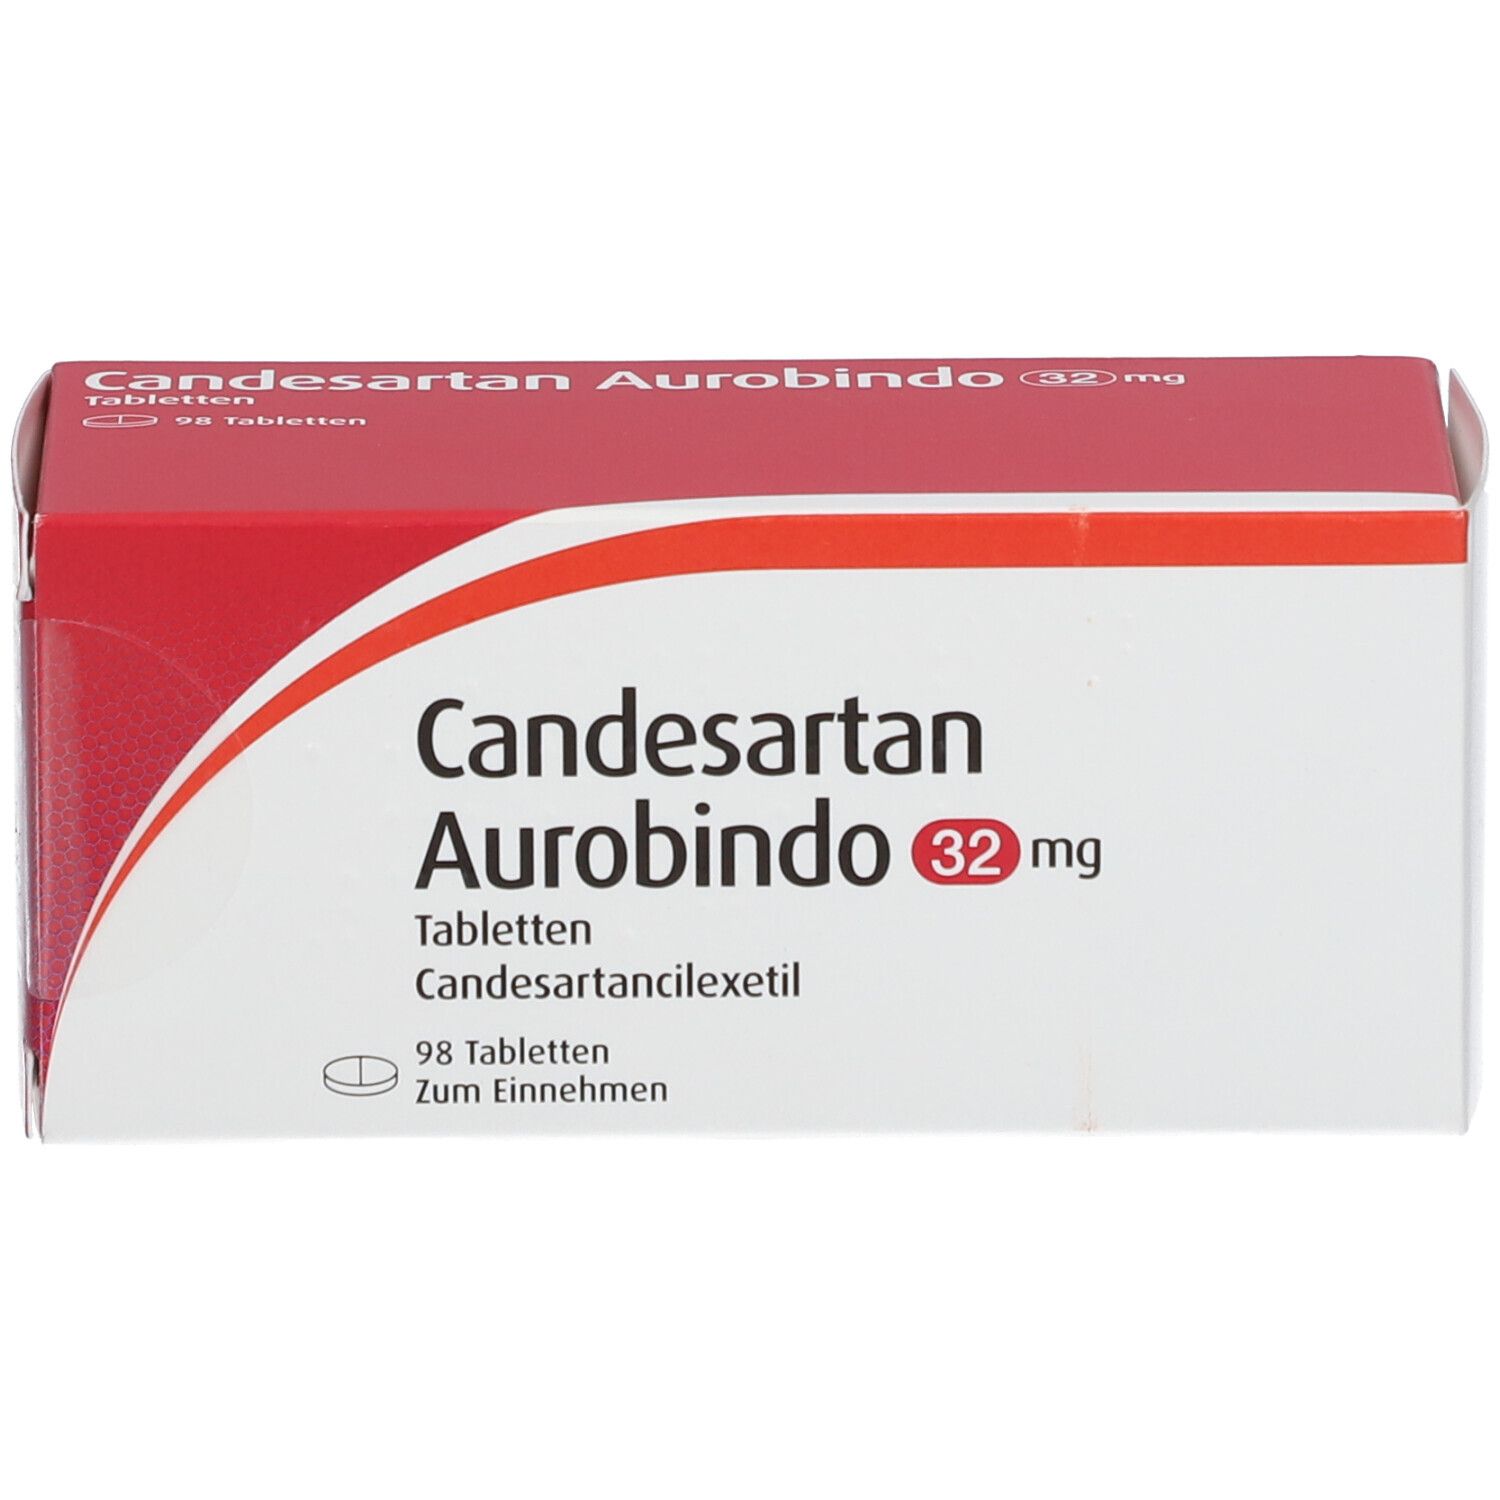 Candesartan Aurobindo 32 mg